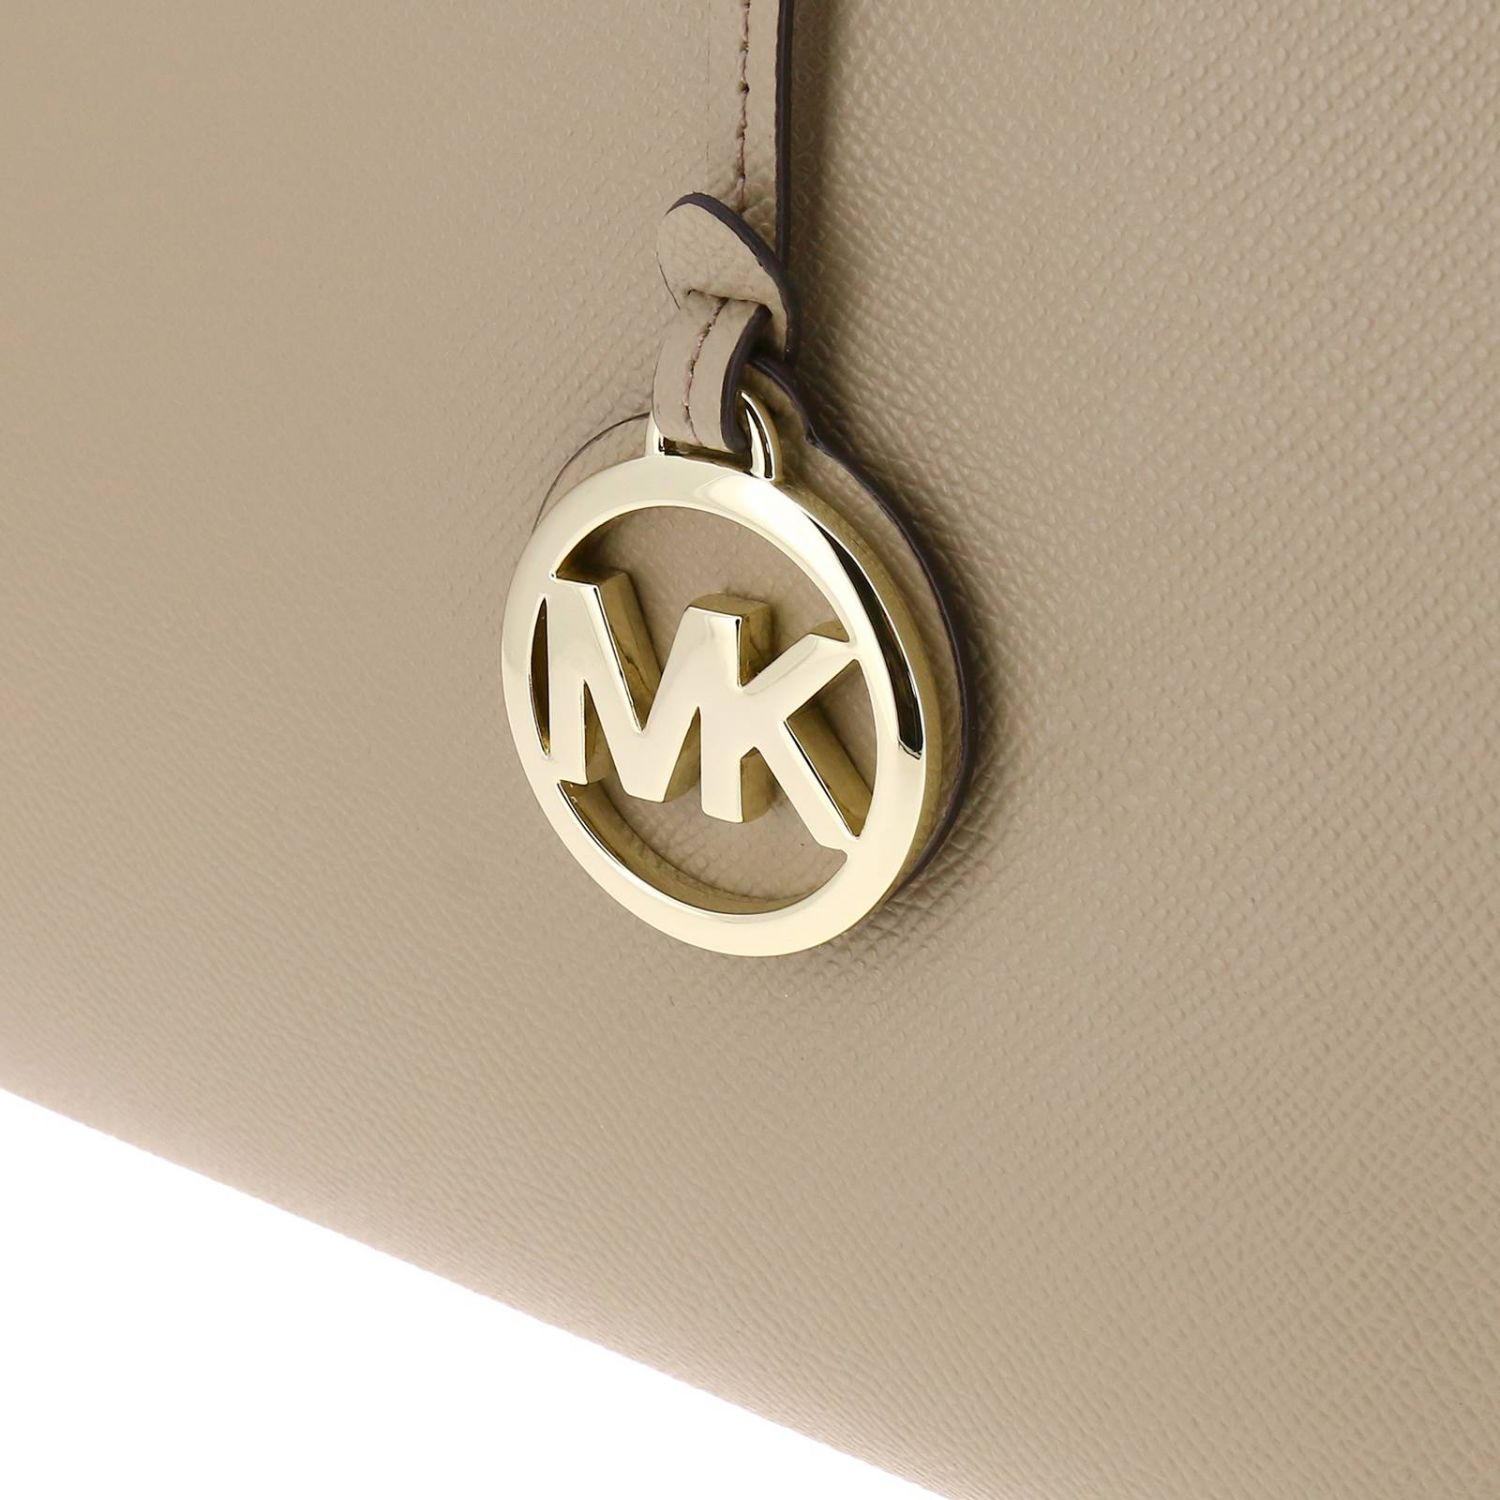 Michael Kors Outlet: crossbody bags for woman - Beige | Michael Kors ...